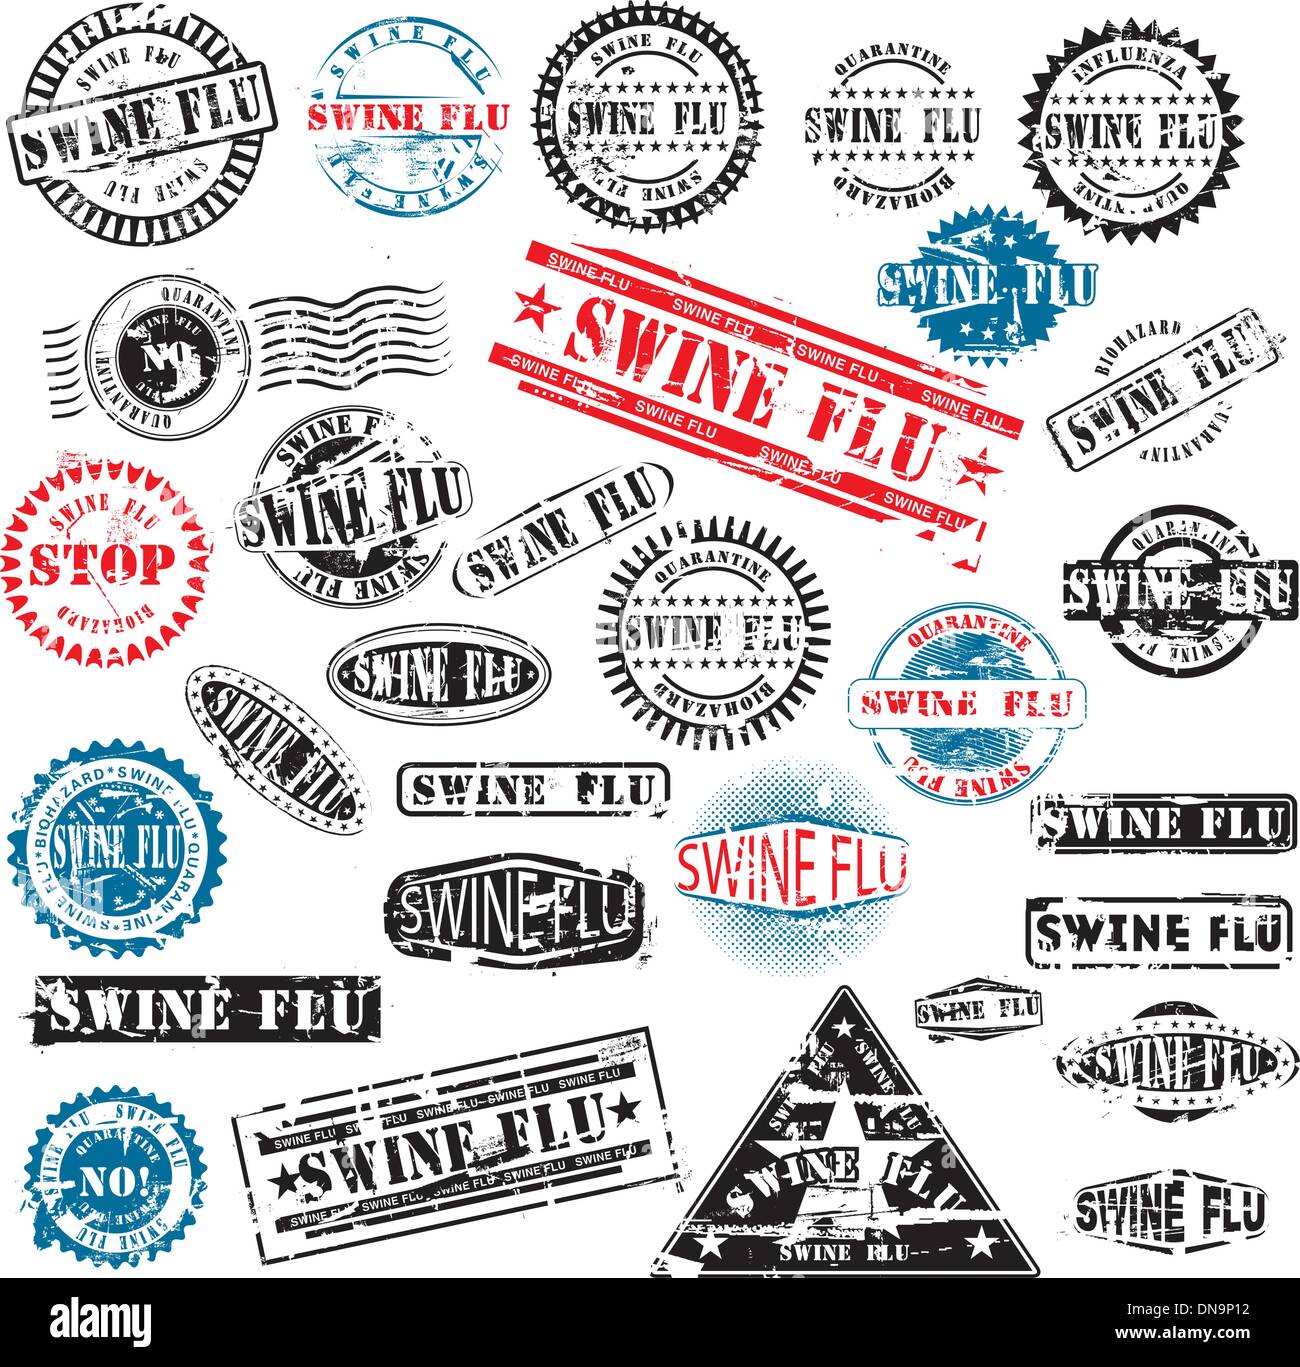 Rubber stamps Swine Flu grunge Stock Vector